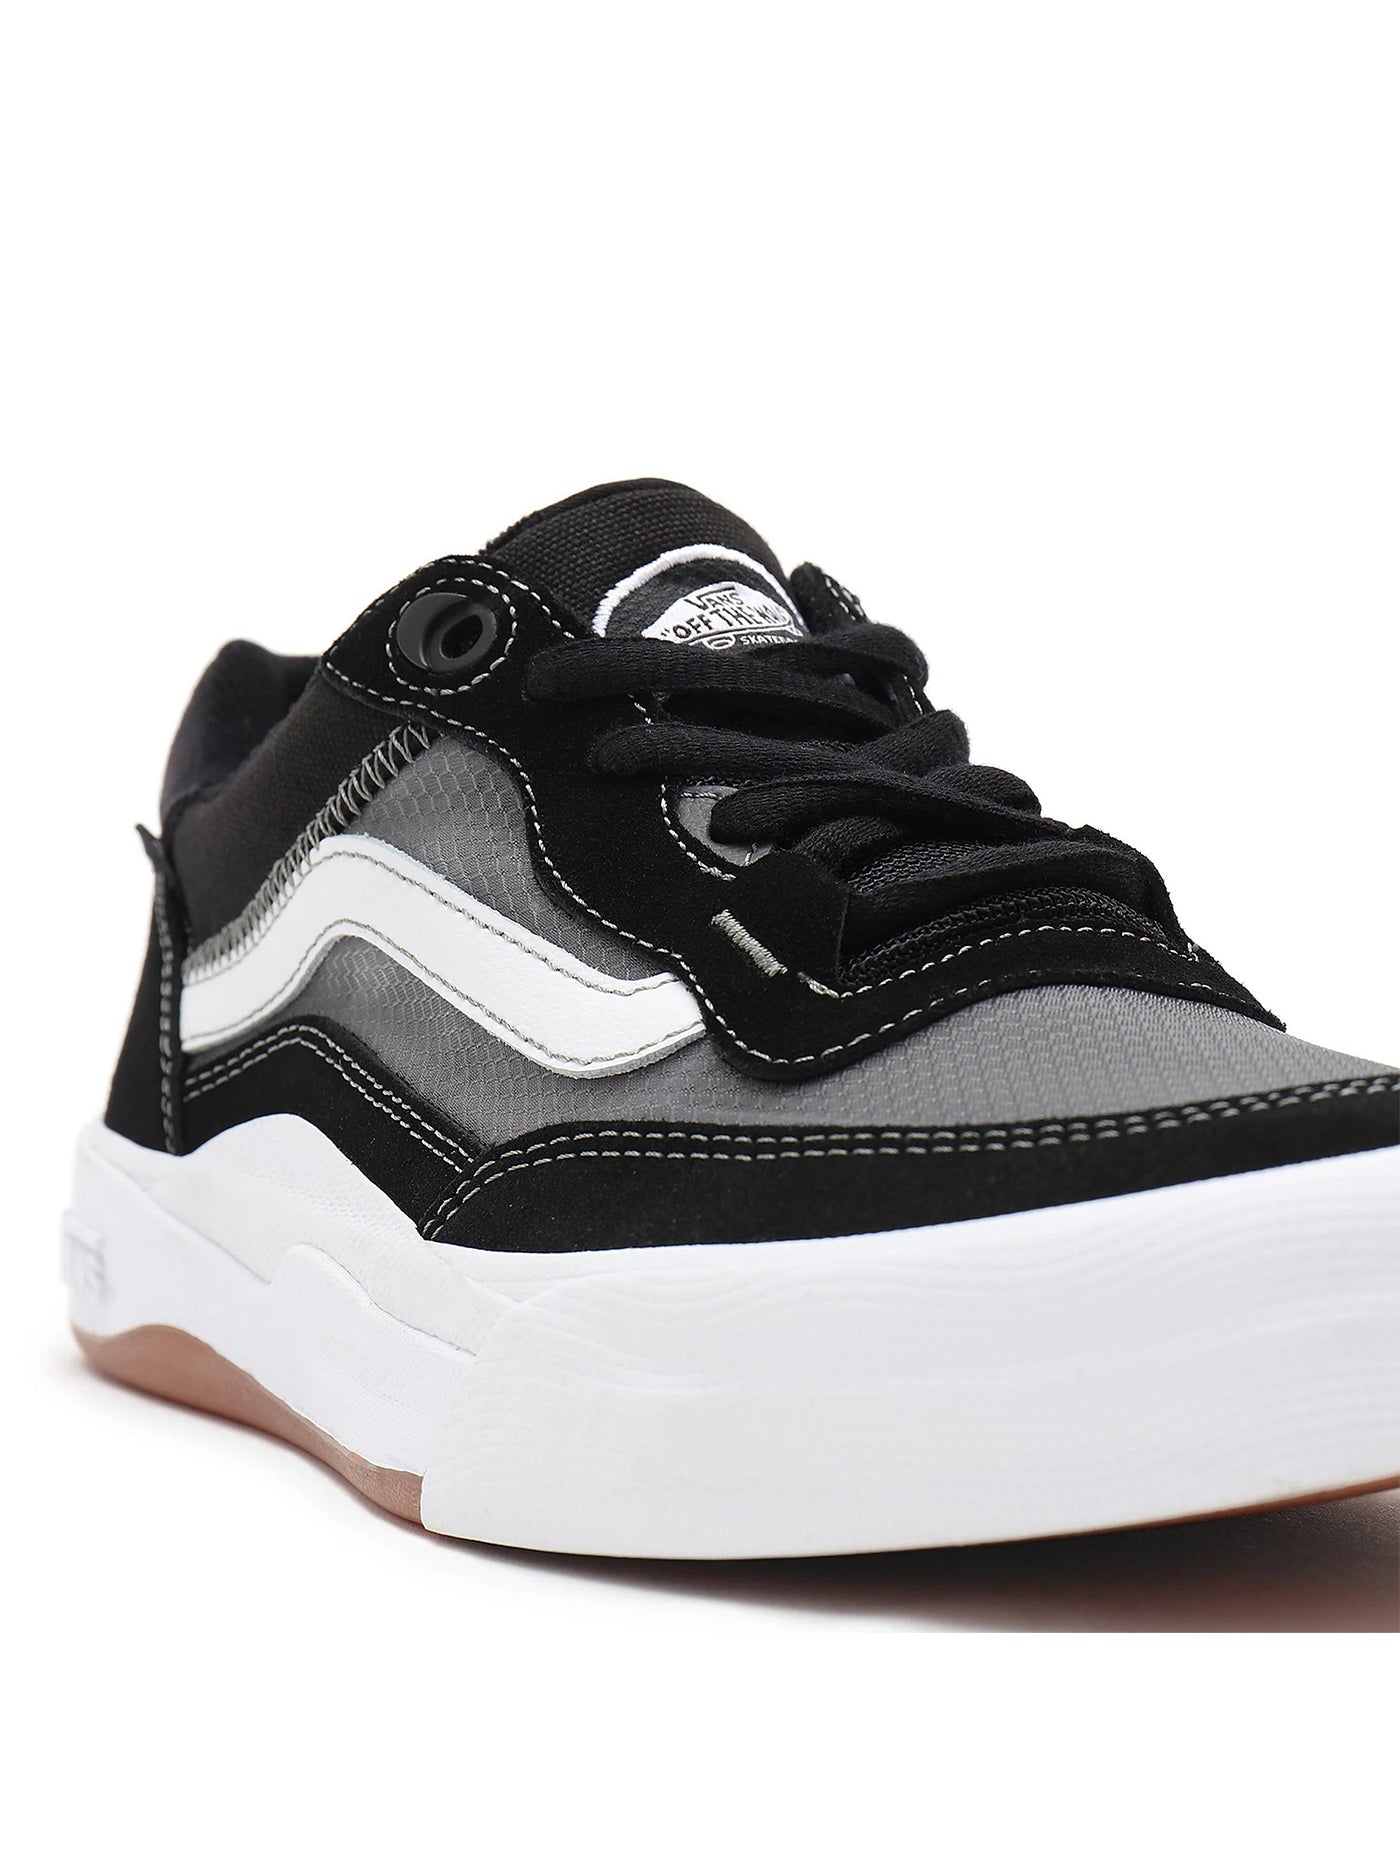 Vans Wayvee Black/White Shoes